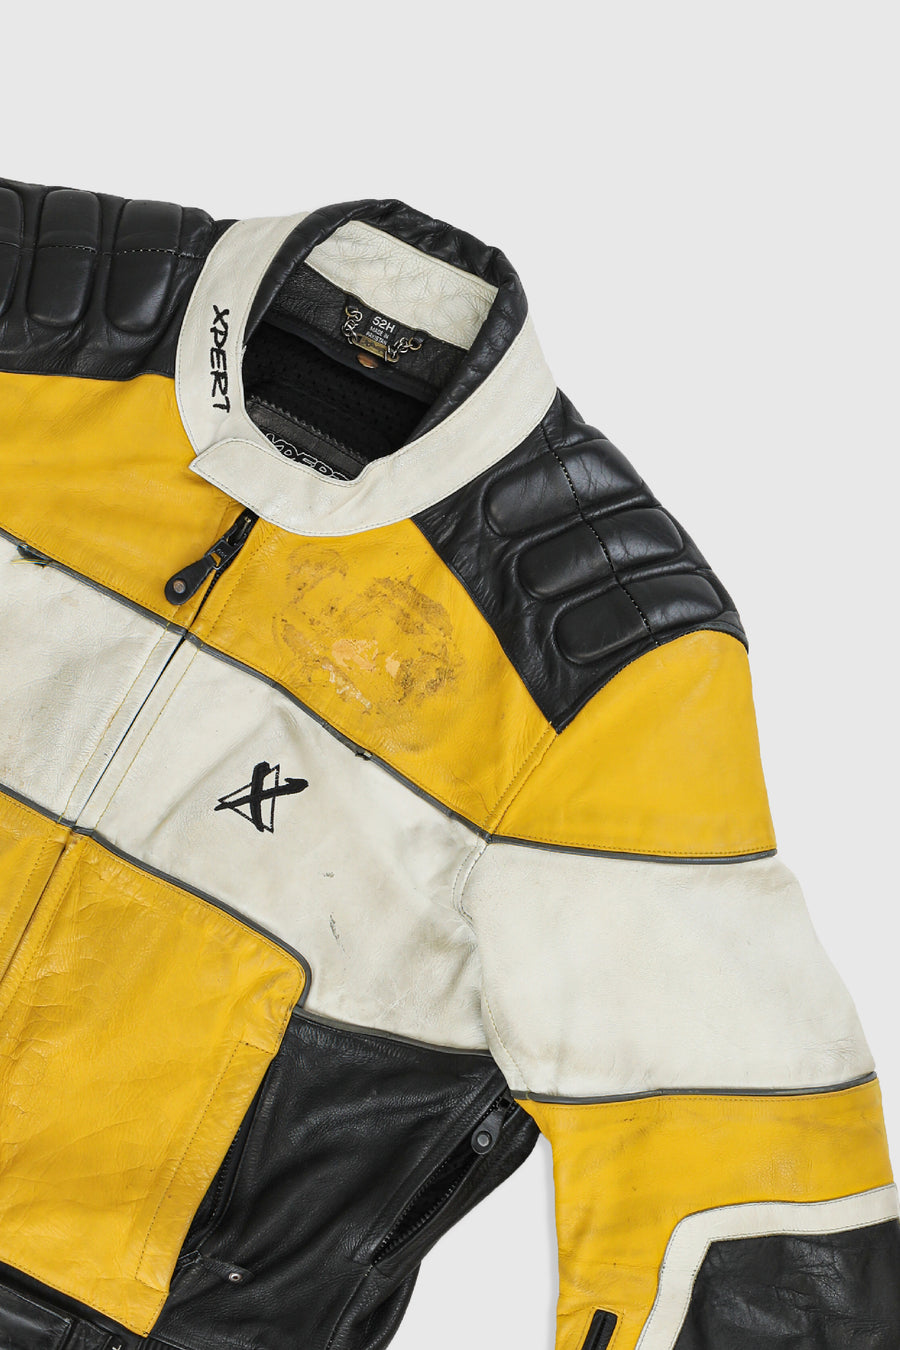 Vintage Racing Leather Jacket